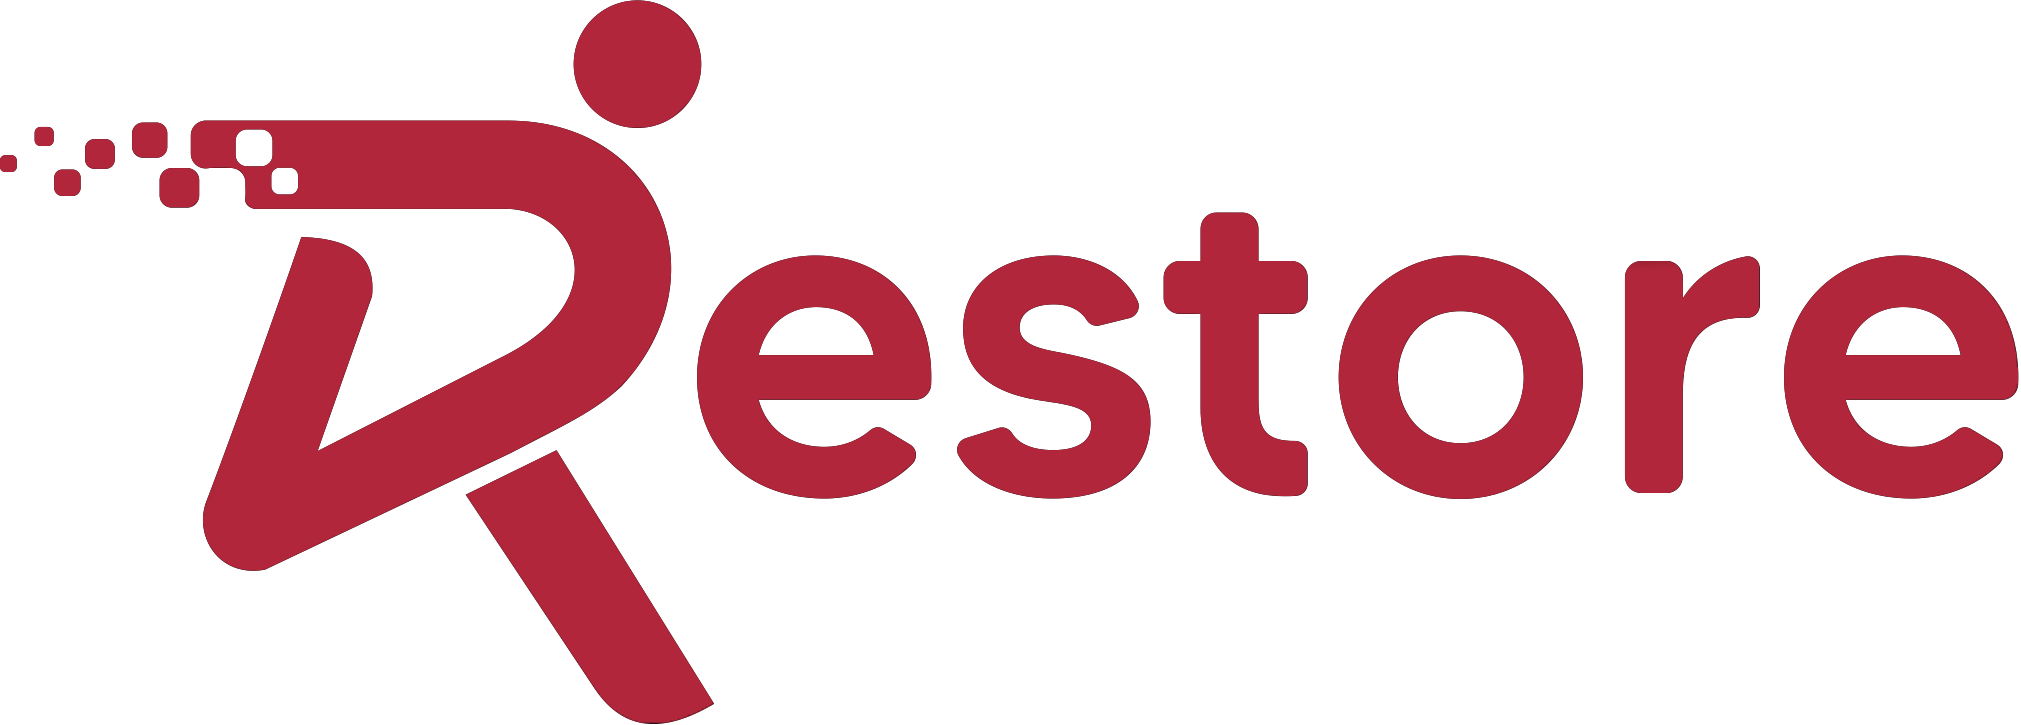 RESTORE logo